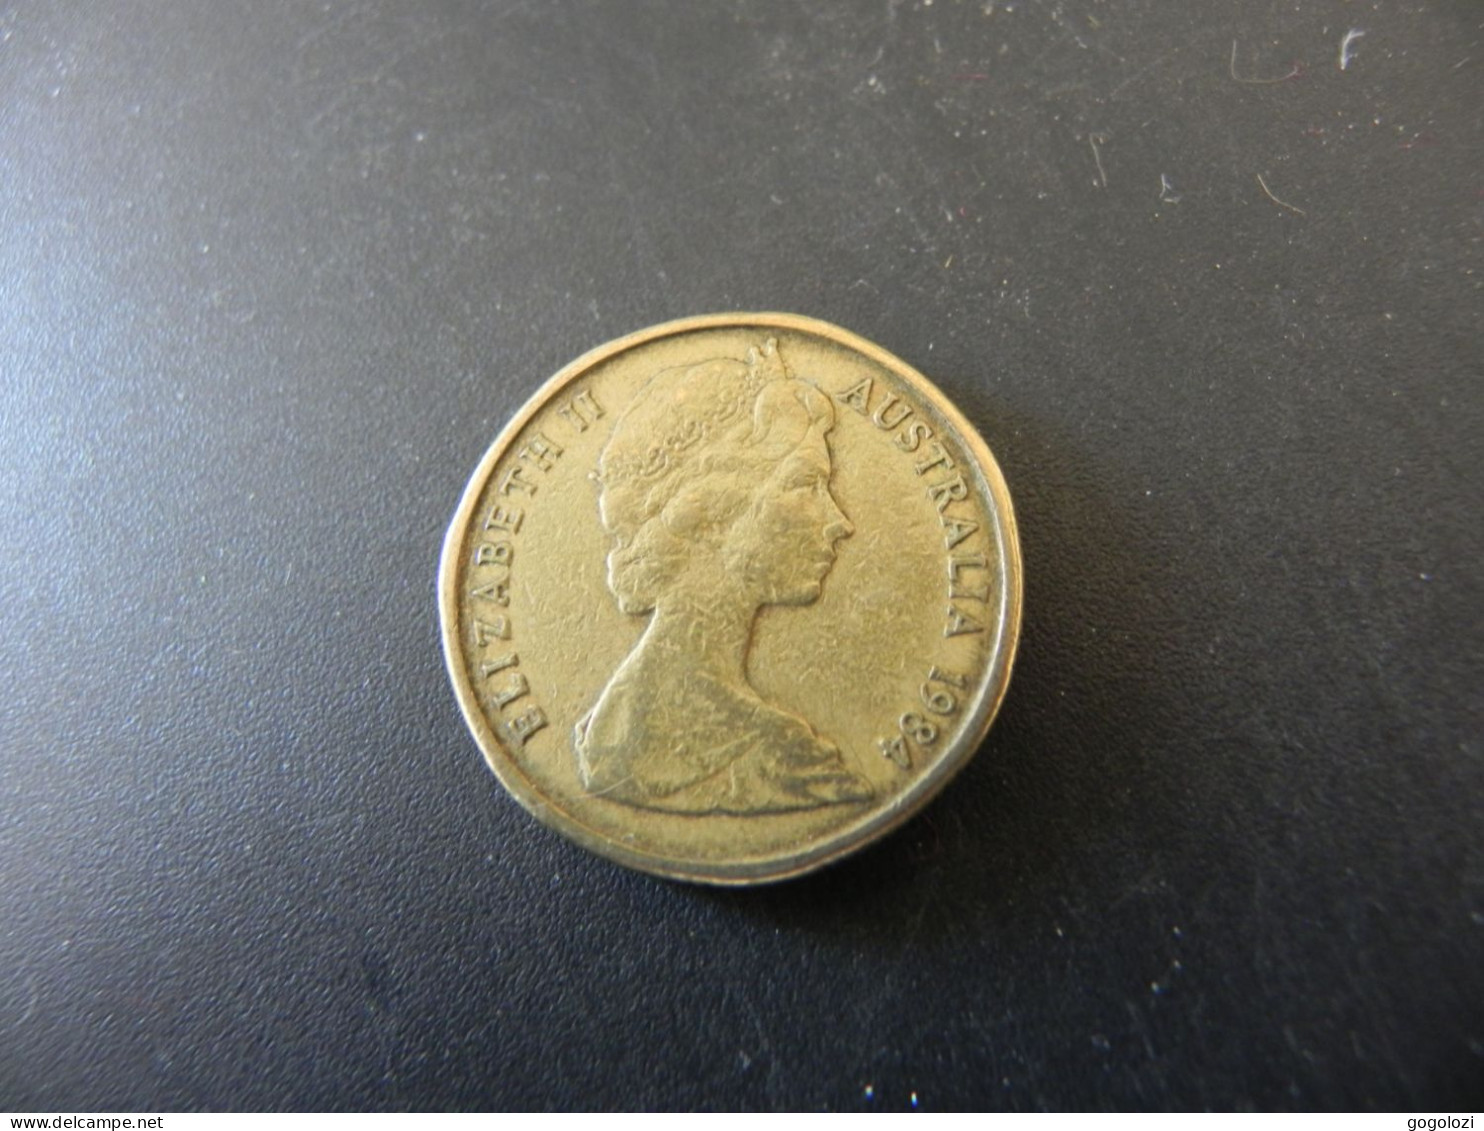 Australia 1 Dollar 1984 - Dollar